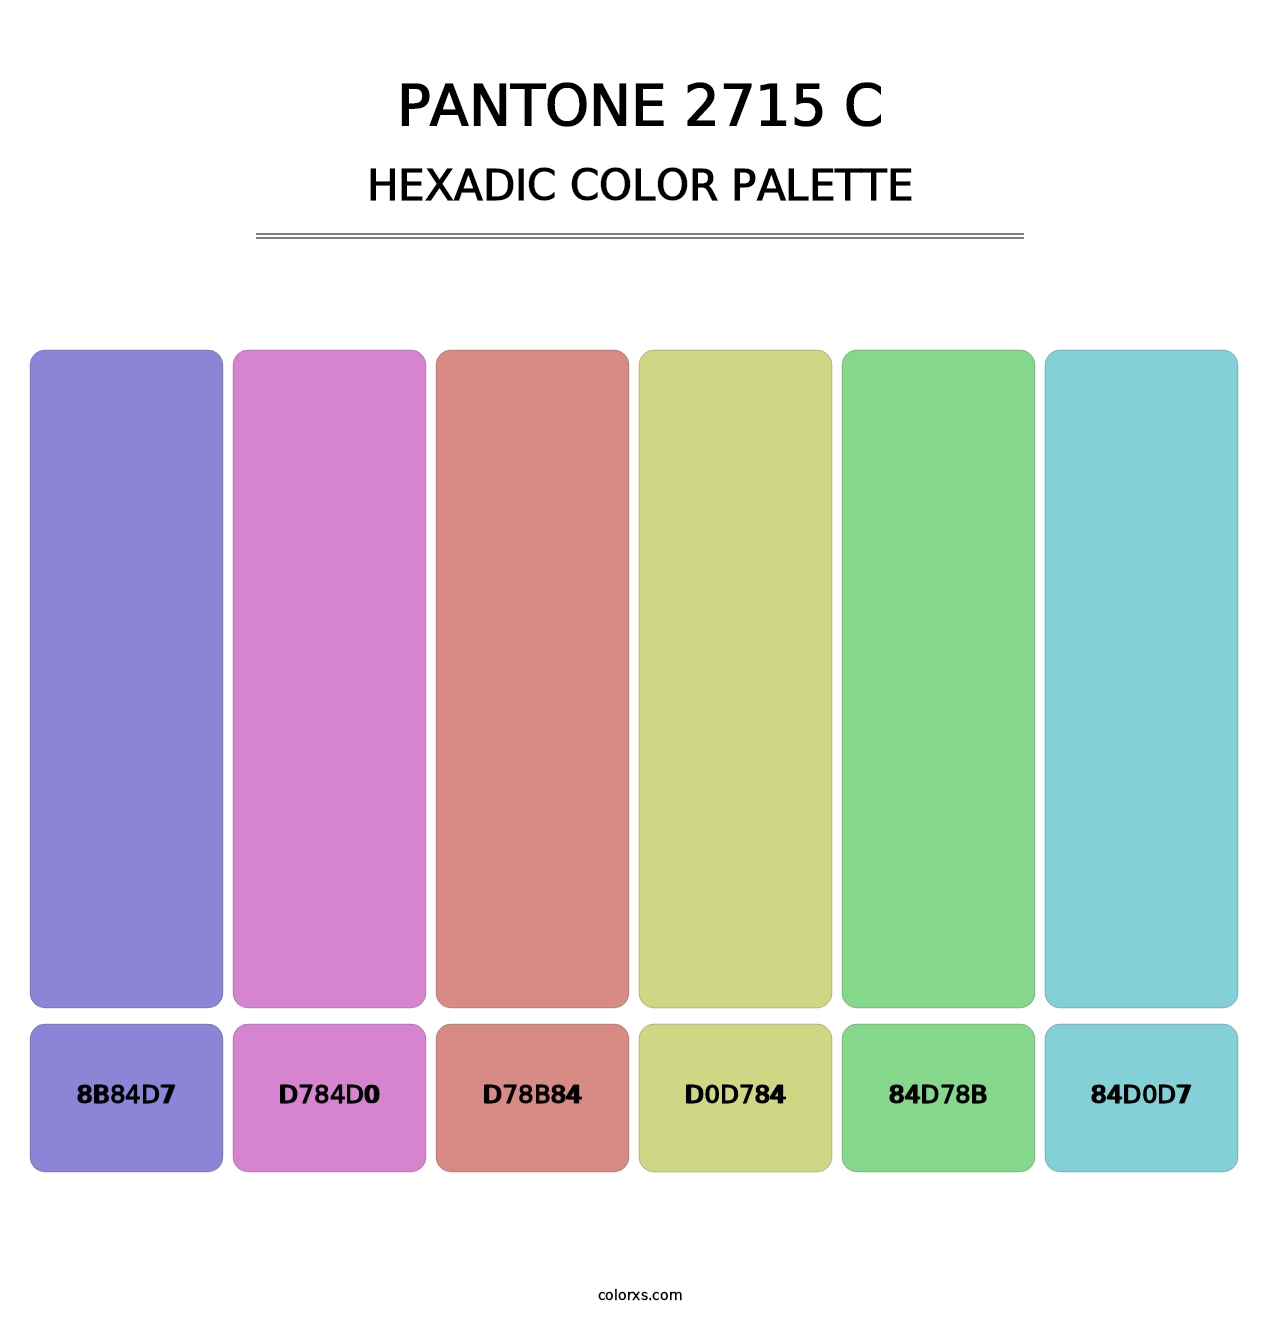 PANTONE 2715 C - Hexadic Color Palette